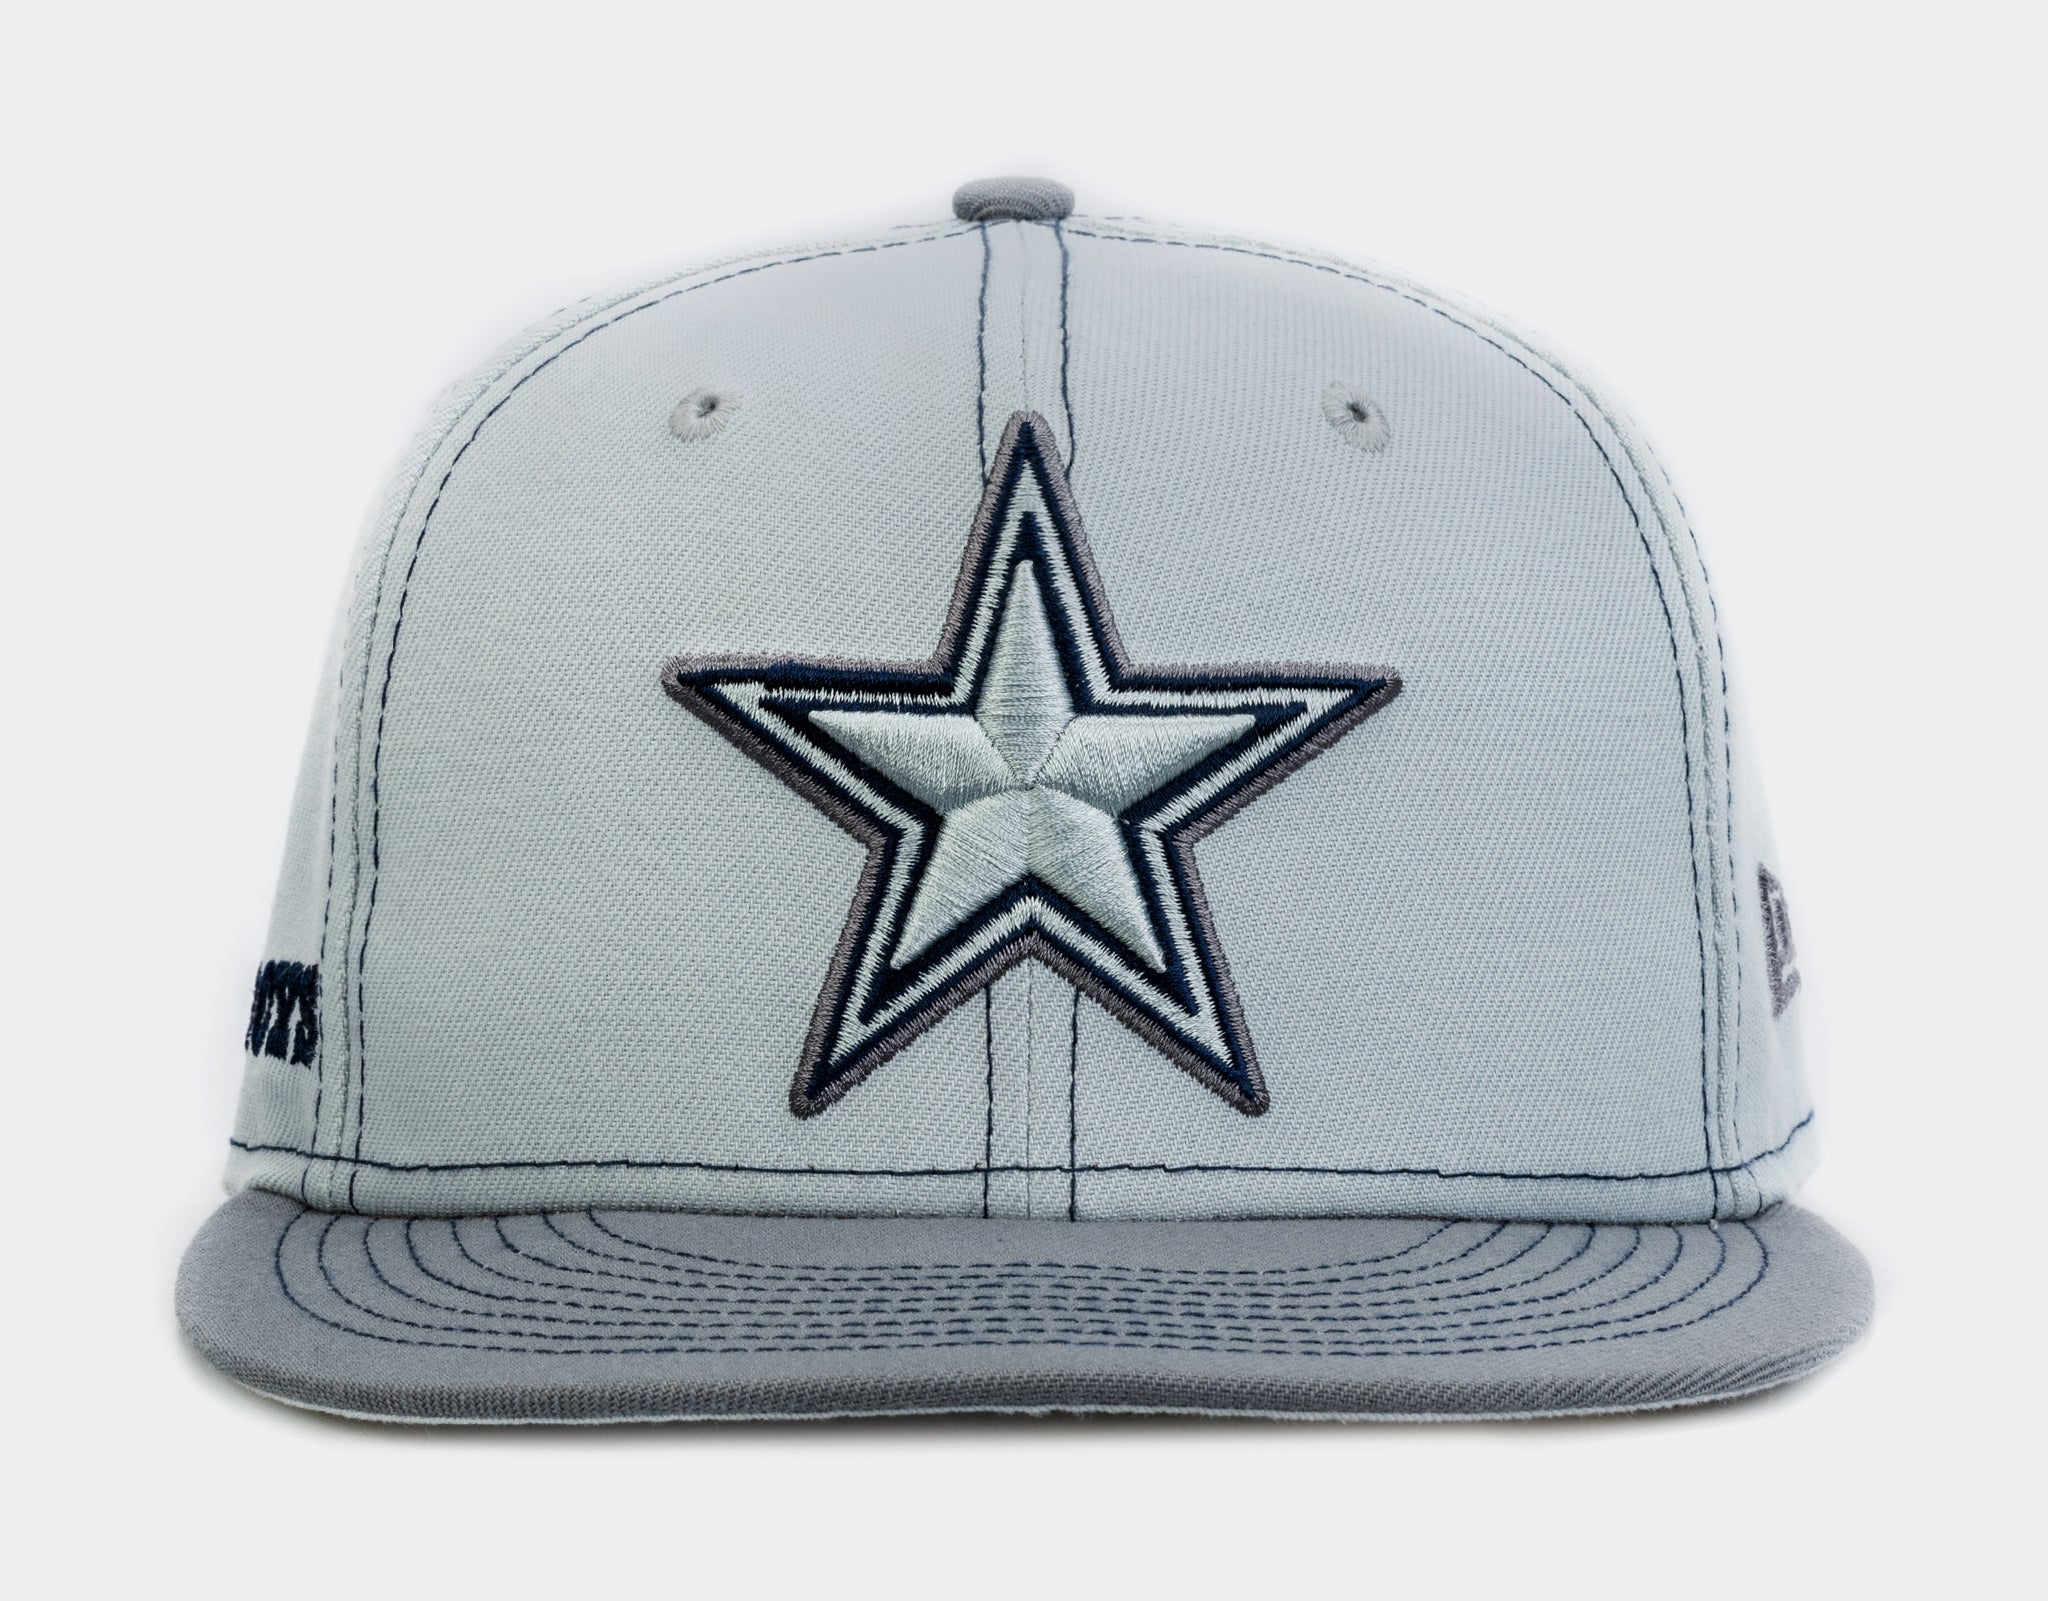 nfl cowboys hat